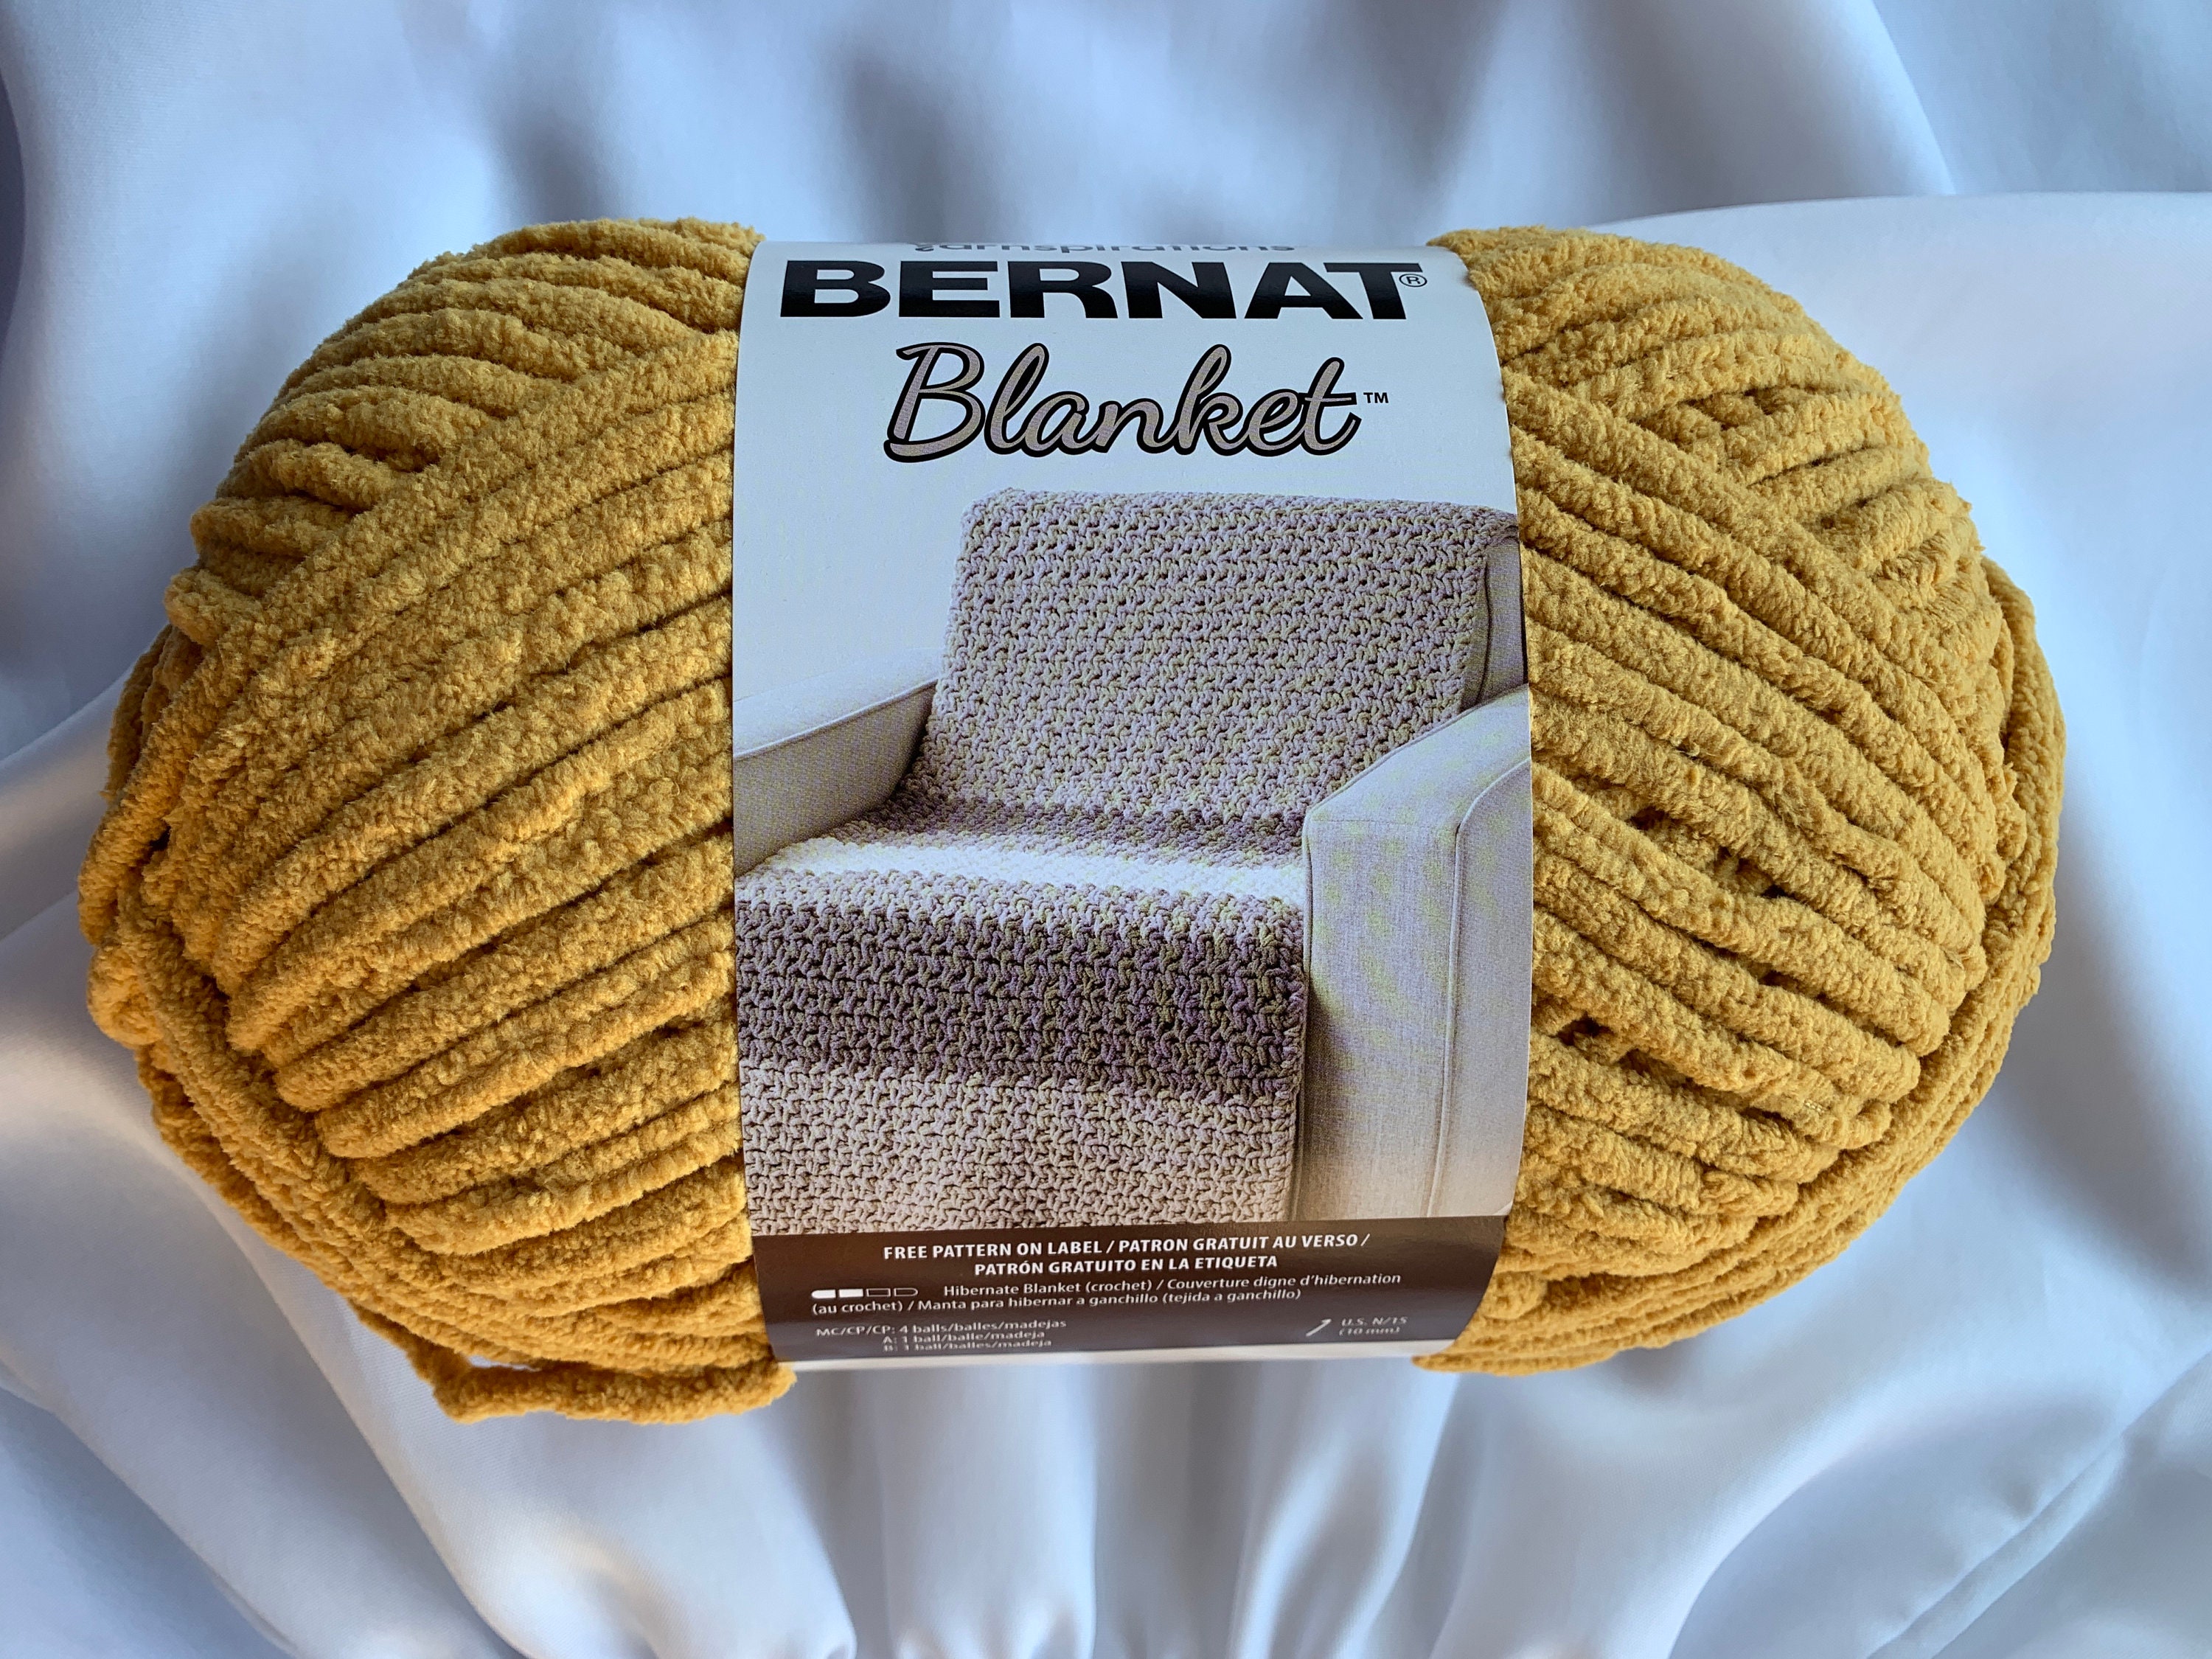 Bernat Blanket #6 Super Bulky Polyester Yarn, Gold 10.5oz/300g, 220 Yards (4 Pack)